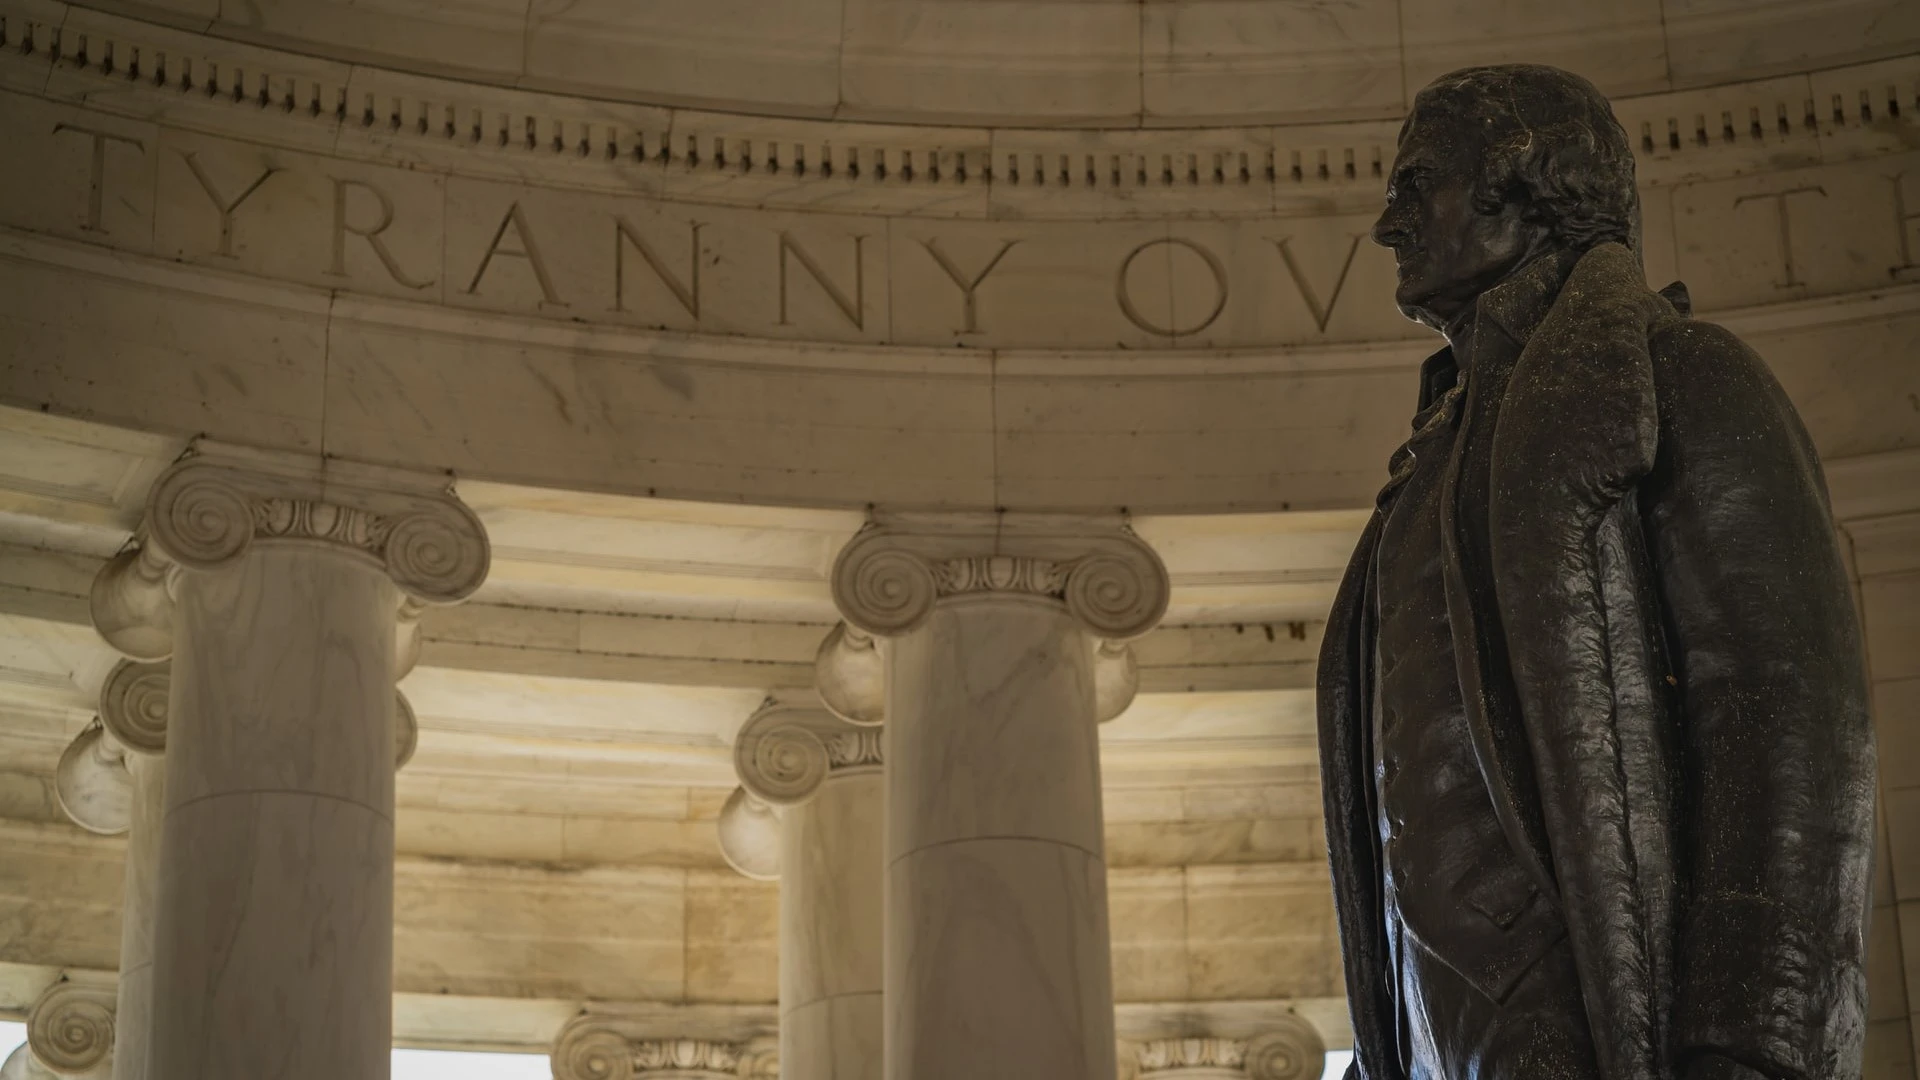 Statue at Jefferson Memorial